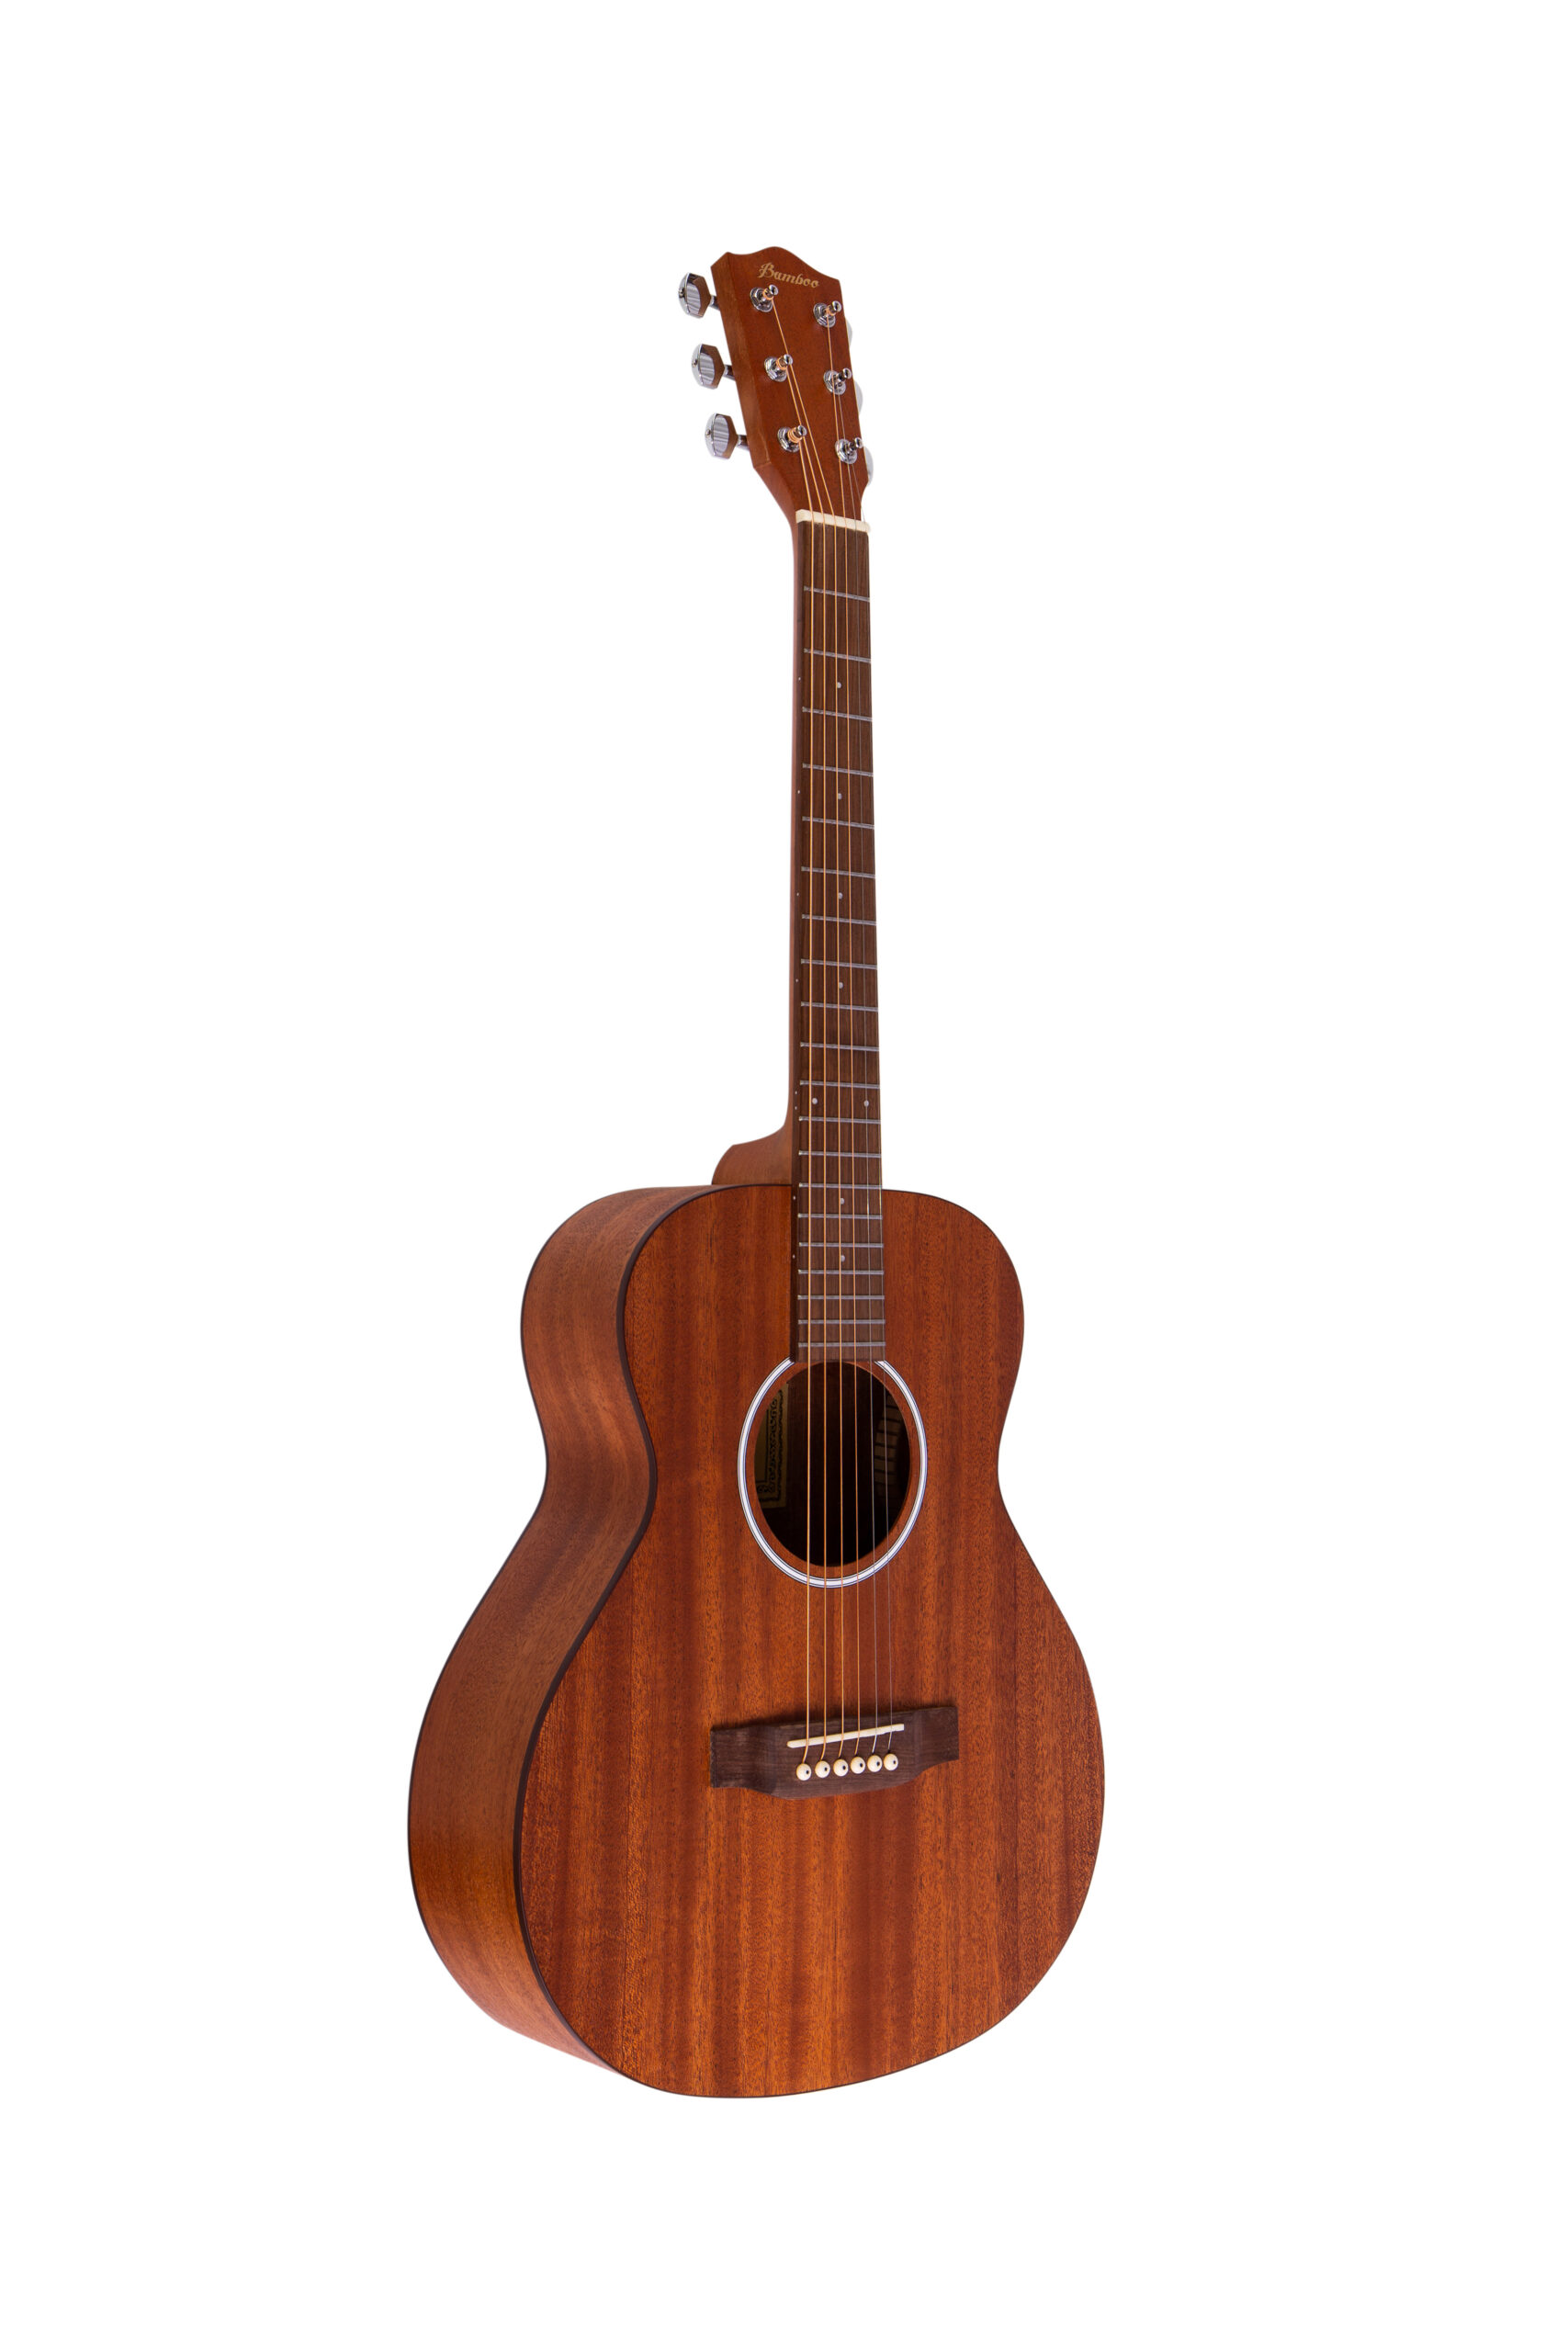 Акустические гитары Bamboo GA-38 Mahogany акустические гитары bamboo ga 40 spruce